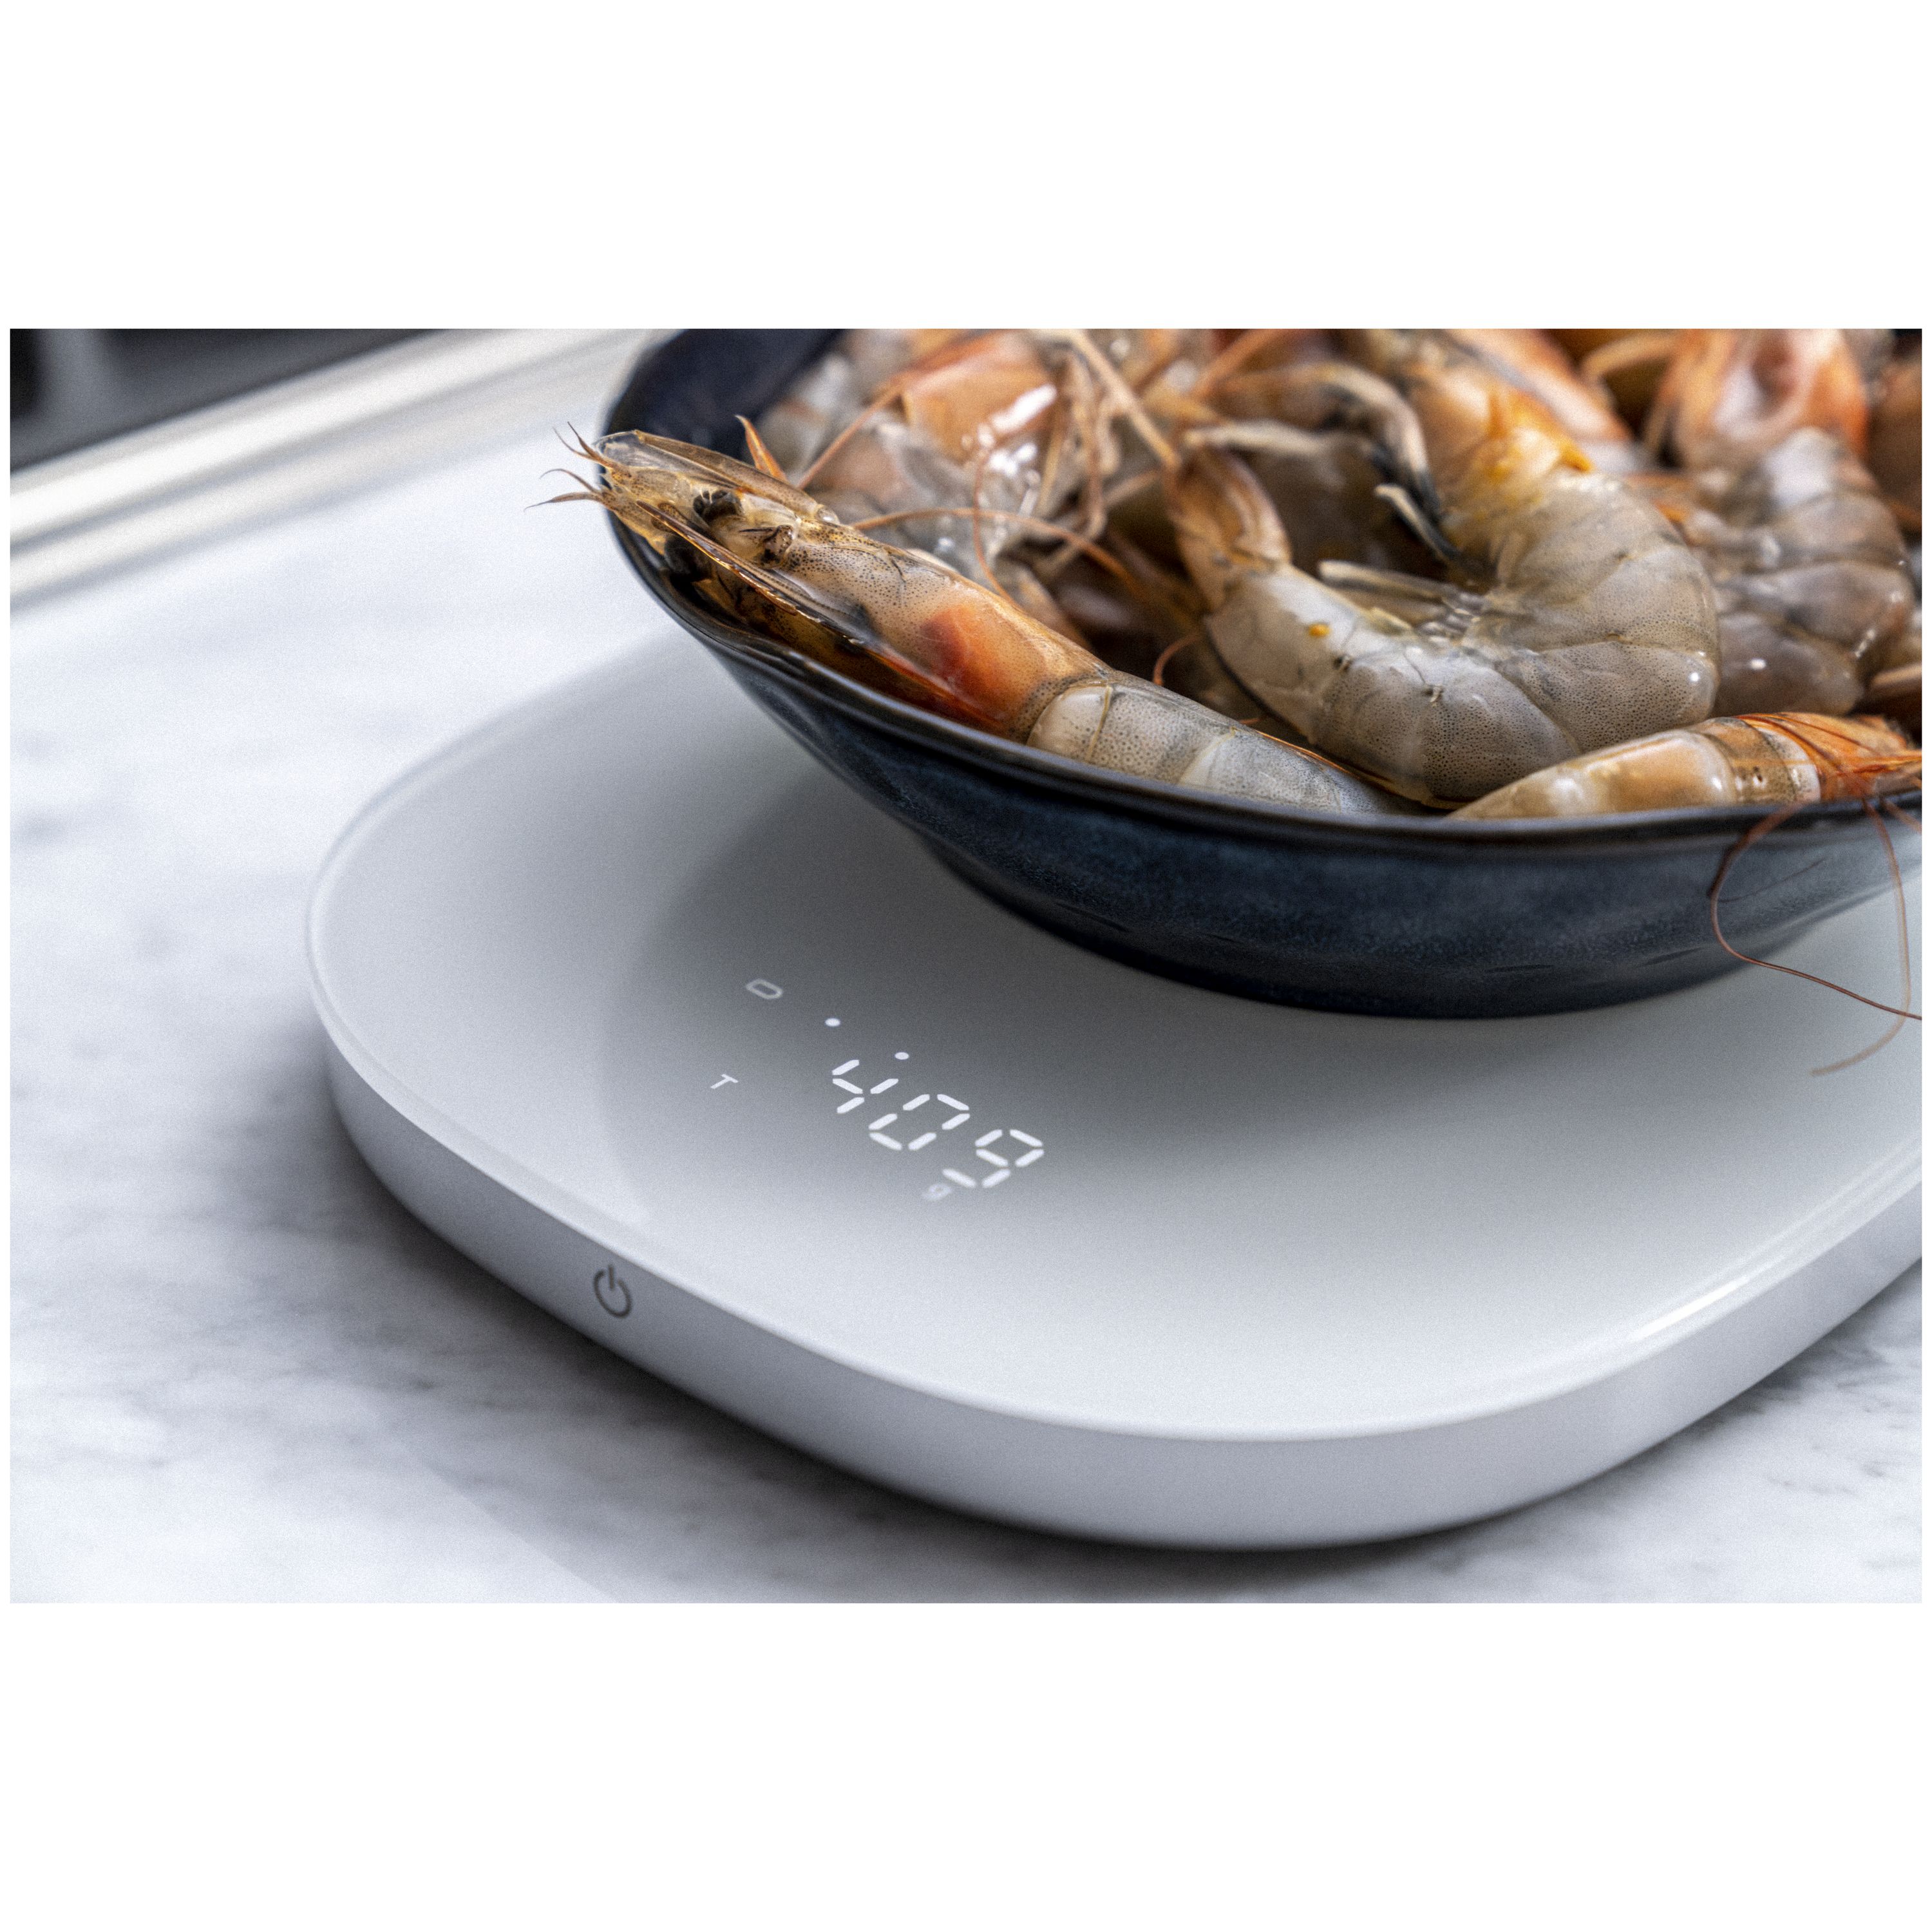 Buy ZWILLING Enfinigy Digital kitchen scale